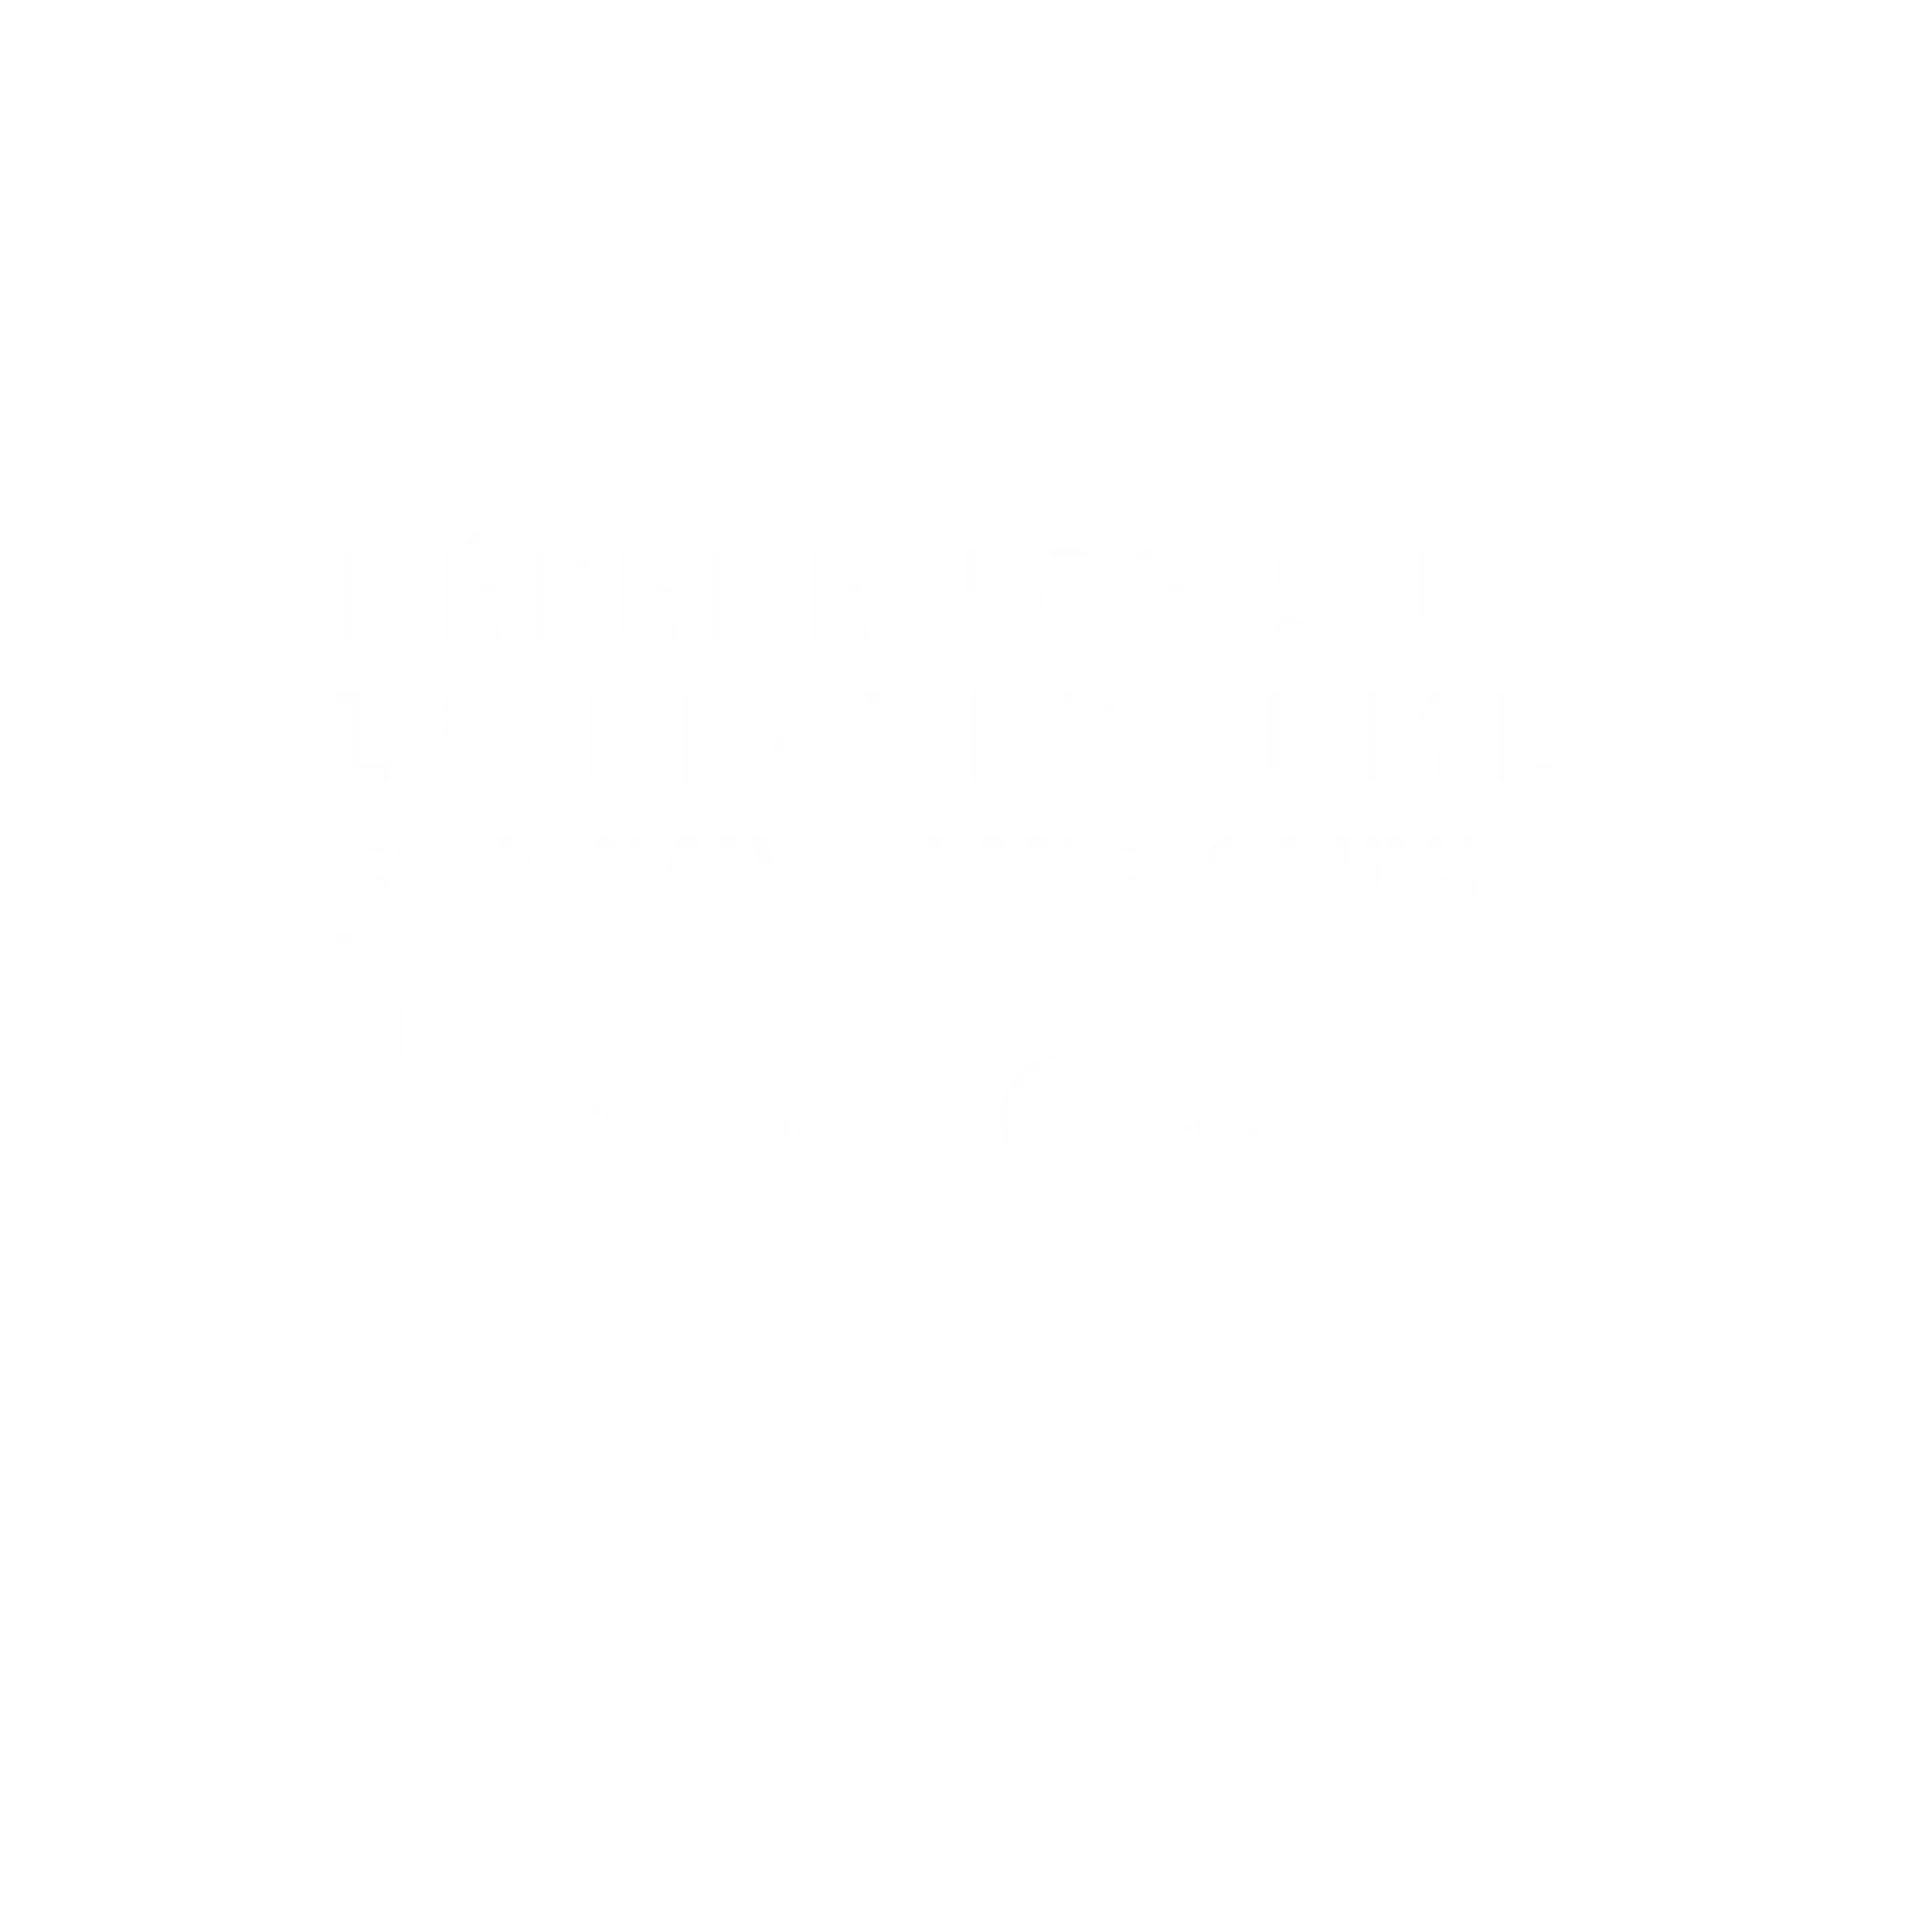 logo cybermalveillance.gouv.fr